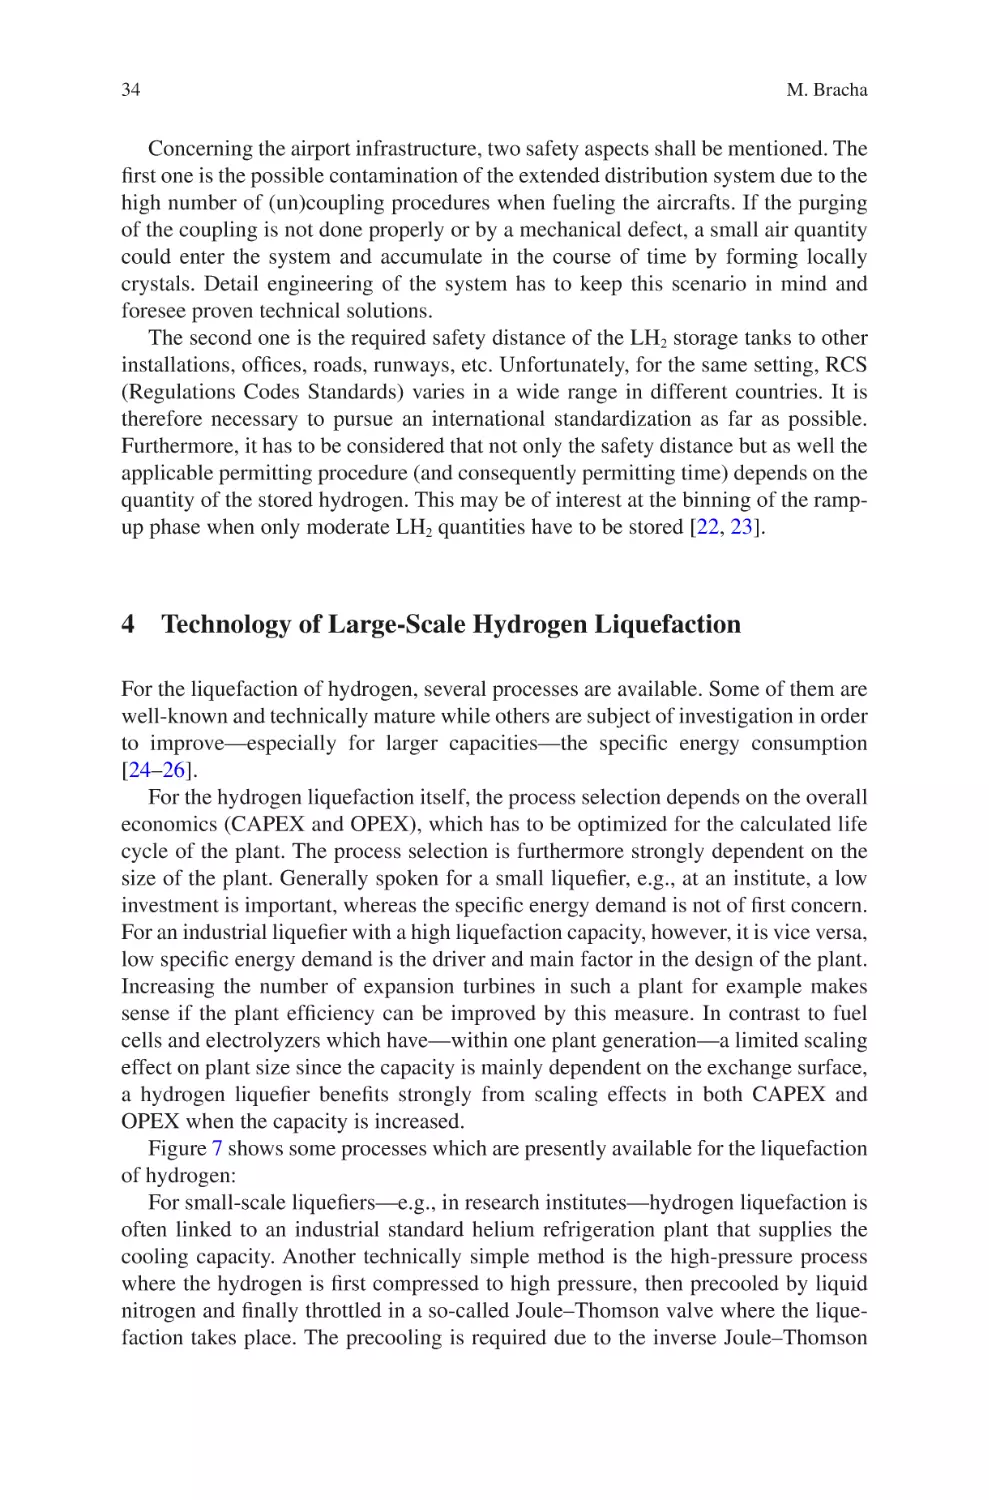 4 Technology of Large-Scale Hydrogen Liquefaction